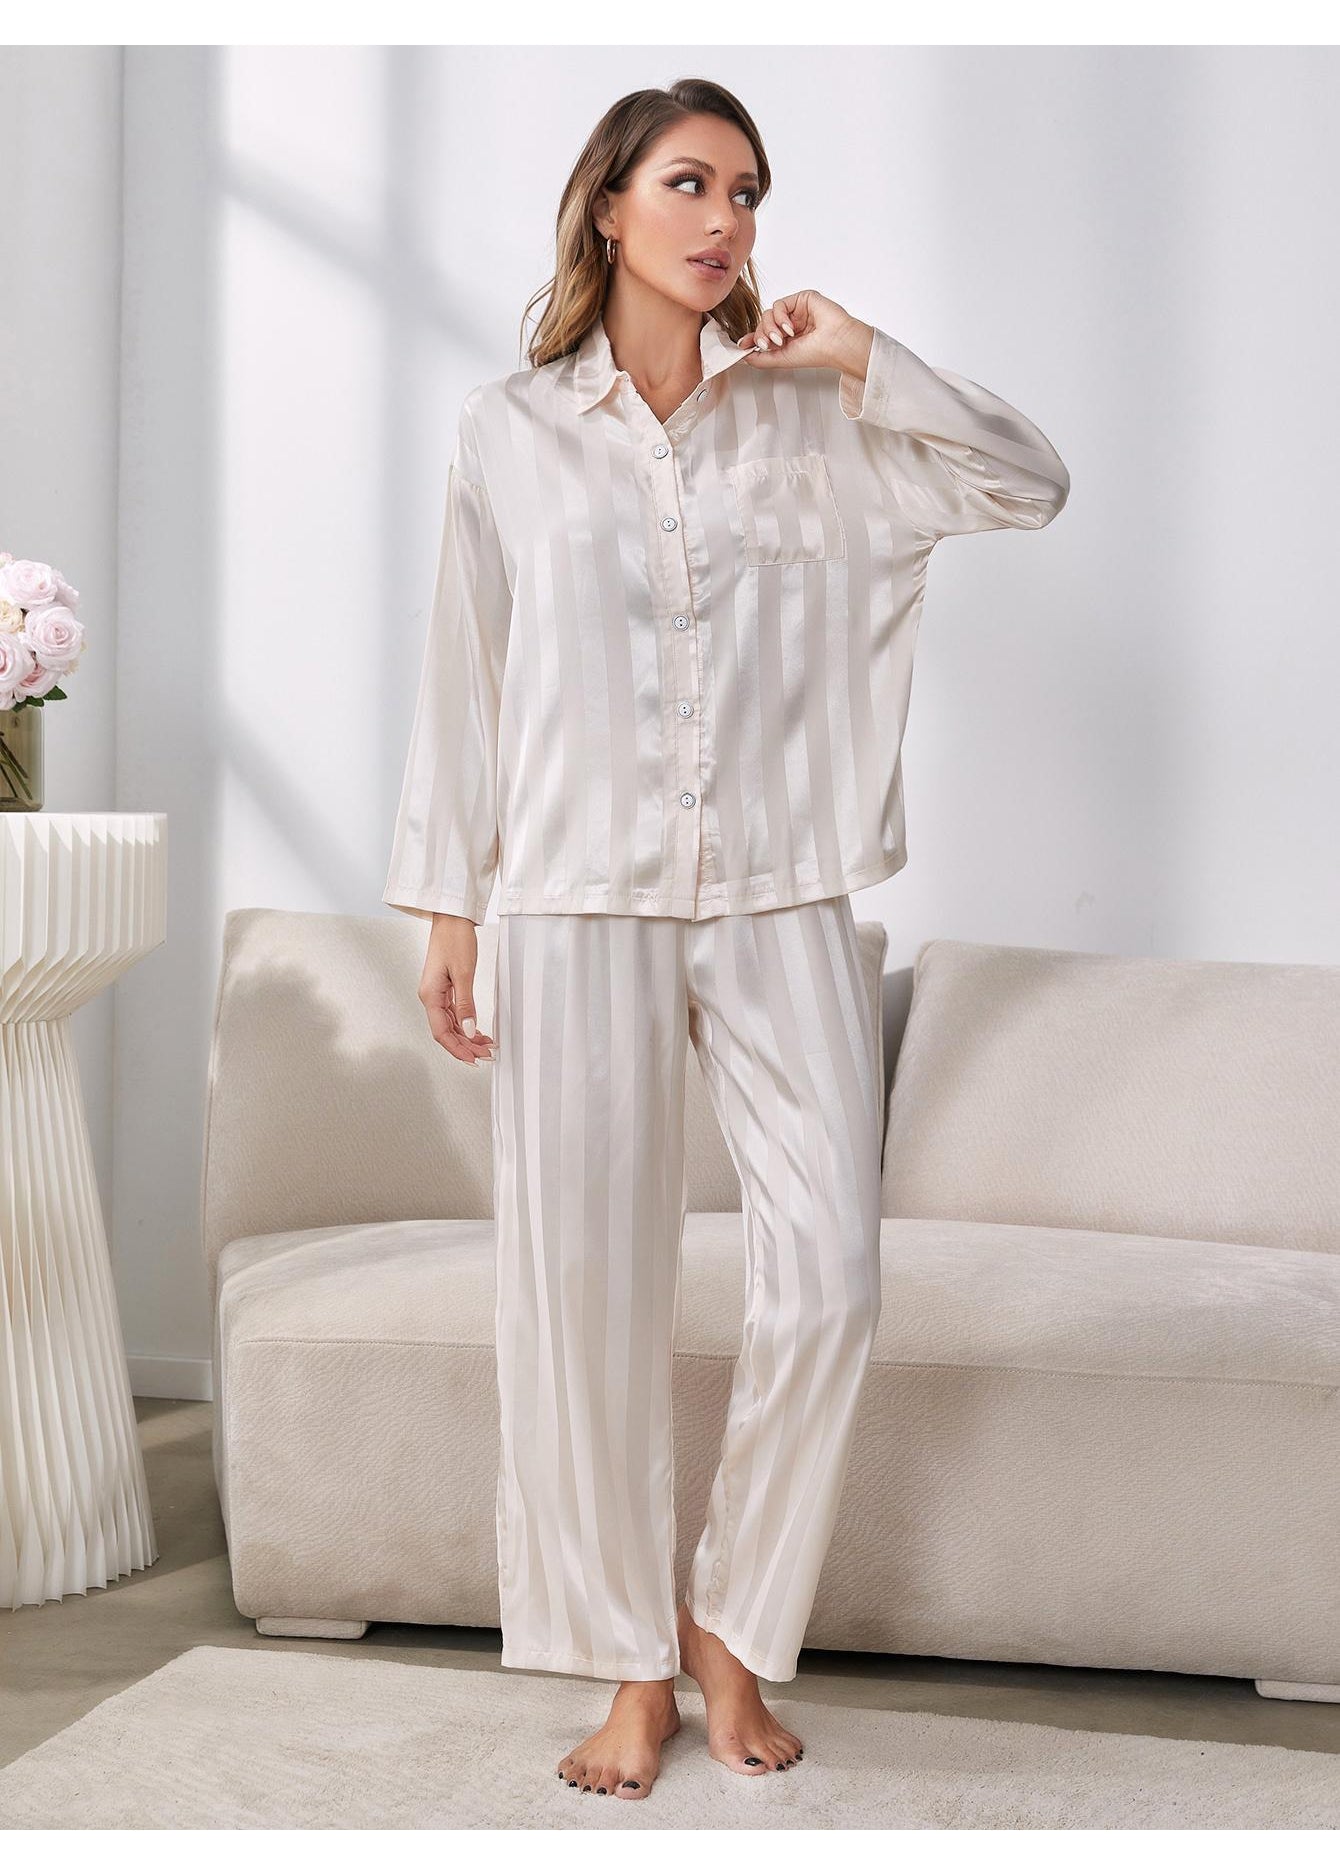 Gray Button-Up Shirt and Pants Pajama Set